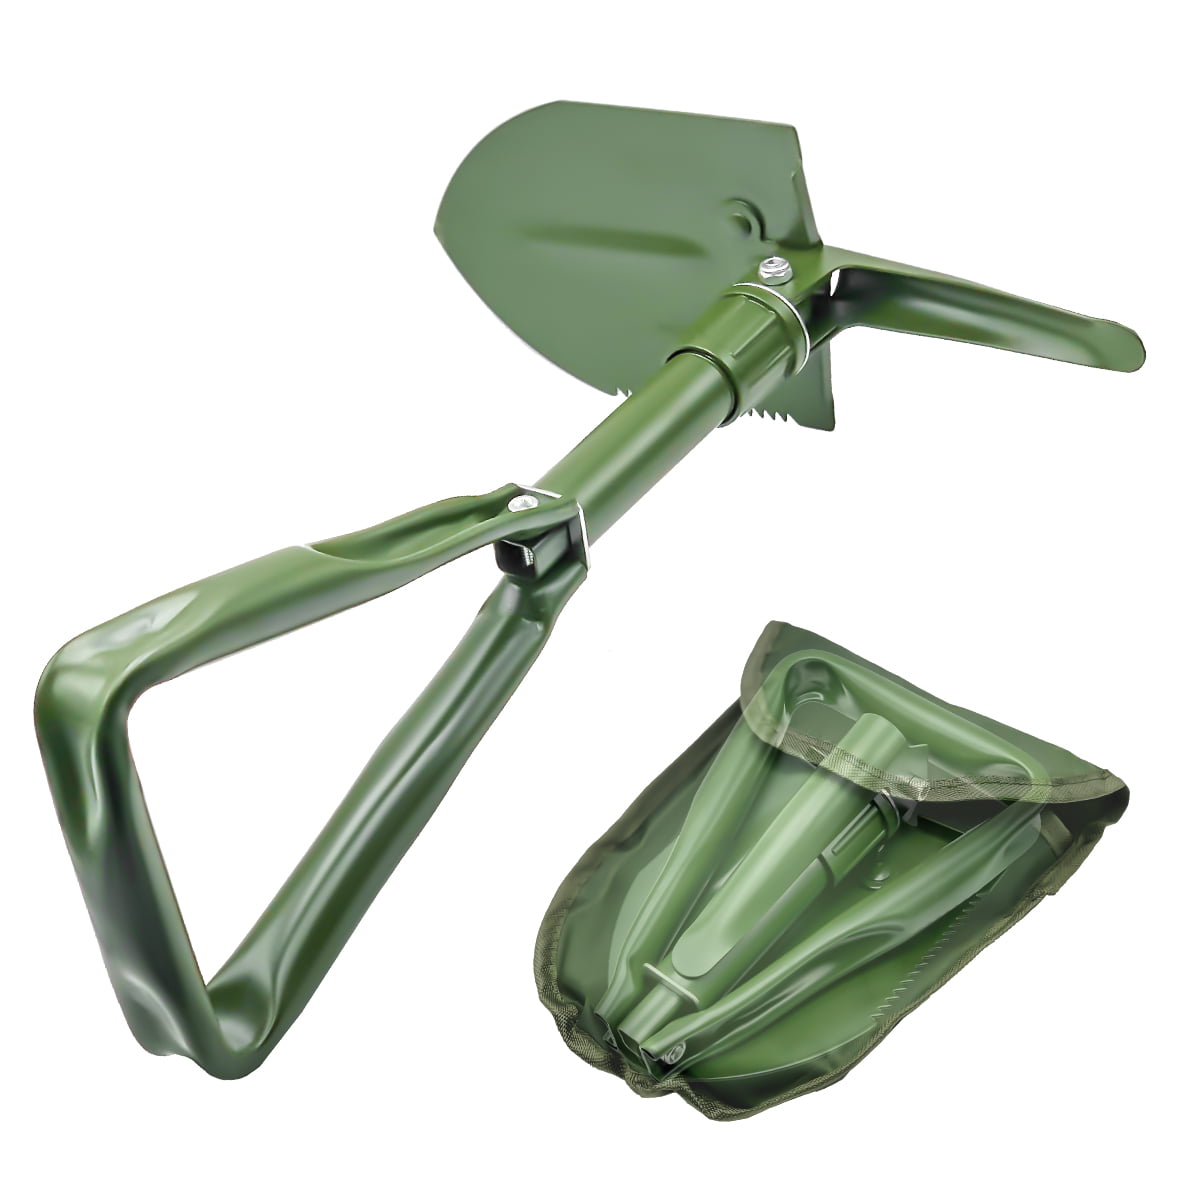 HB Mini Folding Shovel Spade Emergency Garden Camping Survival Trowel Tool Kit+ 